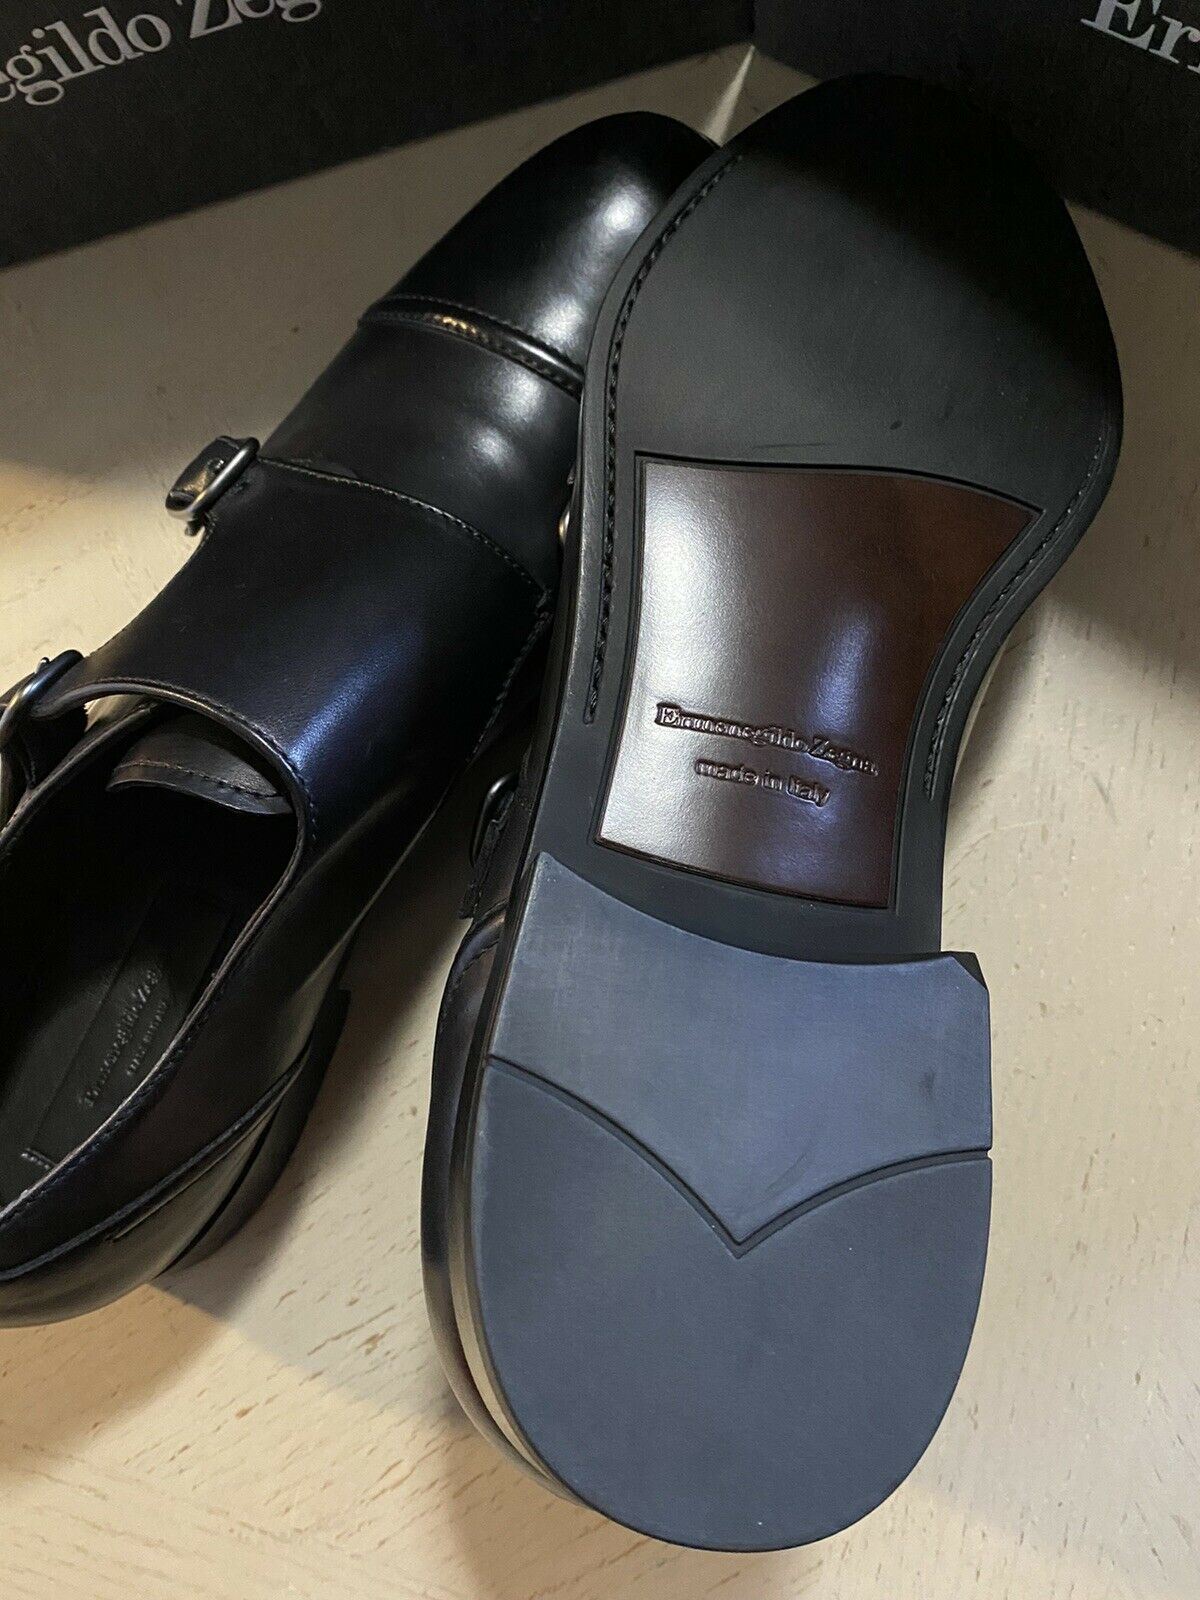 New $650 Ermenegildo Zegna Double Monk Leather Shoes Black 10 US Italy